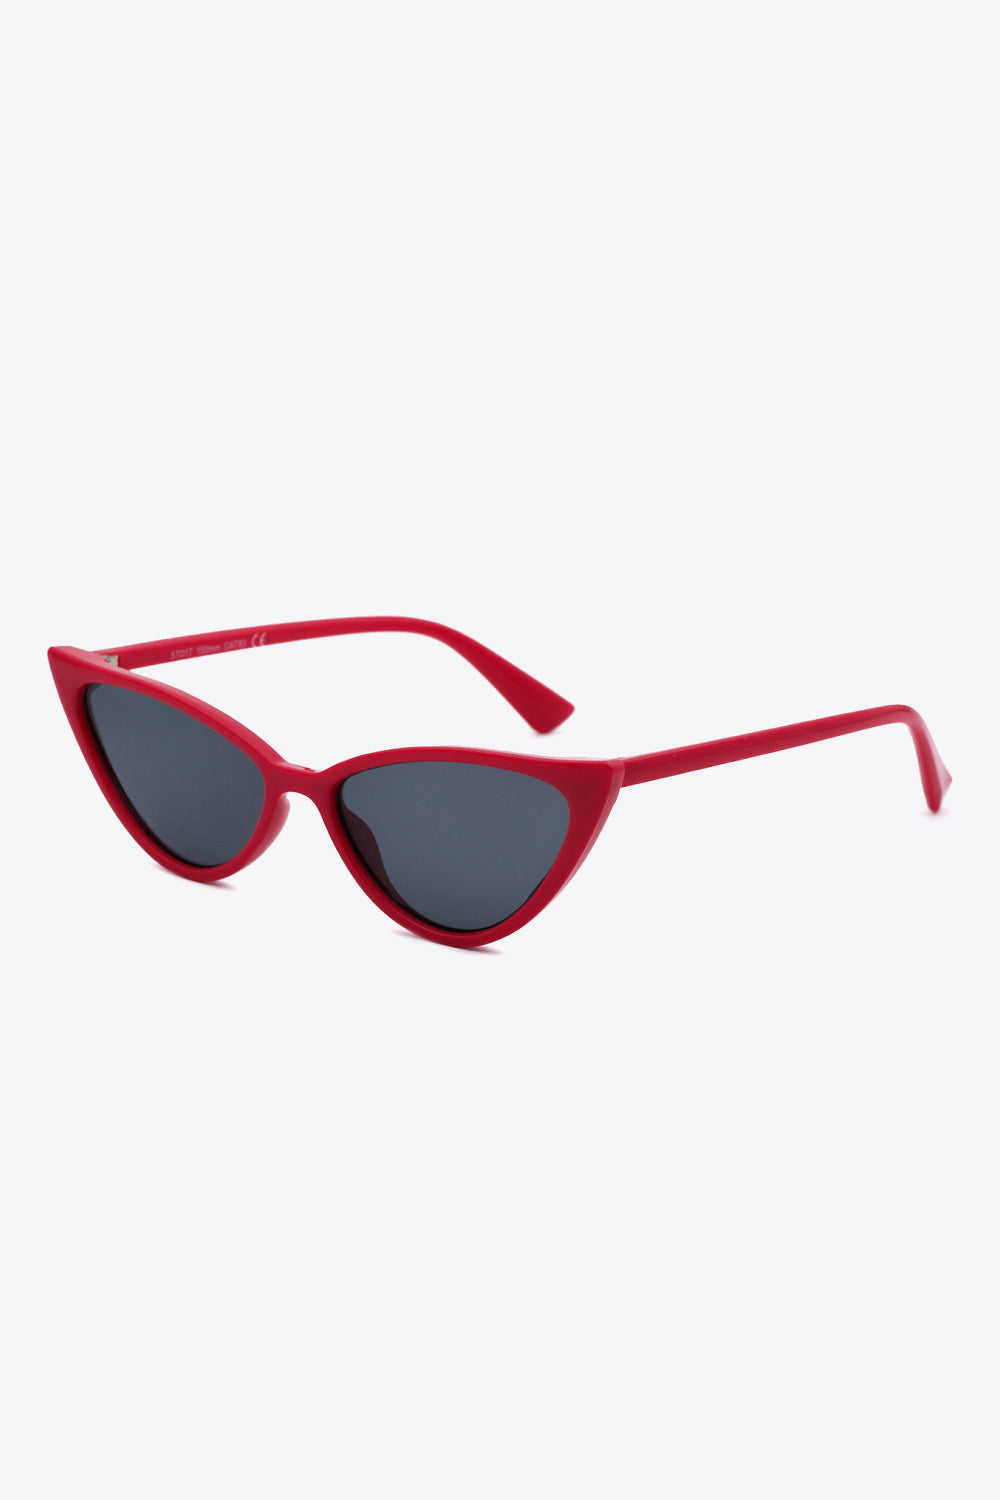 Palo Alto Sunglasses